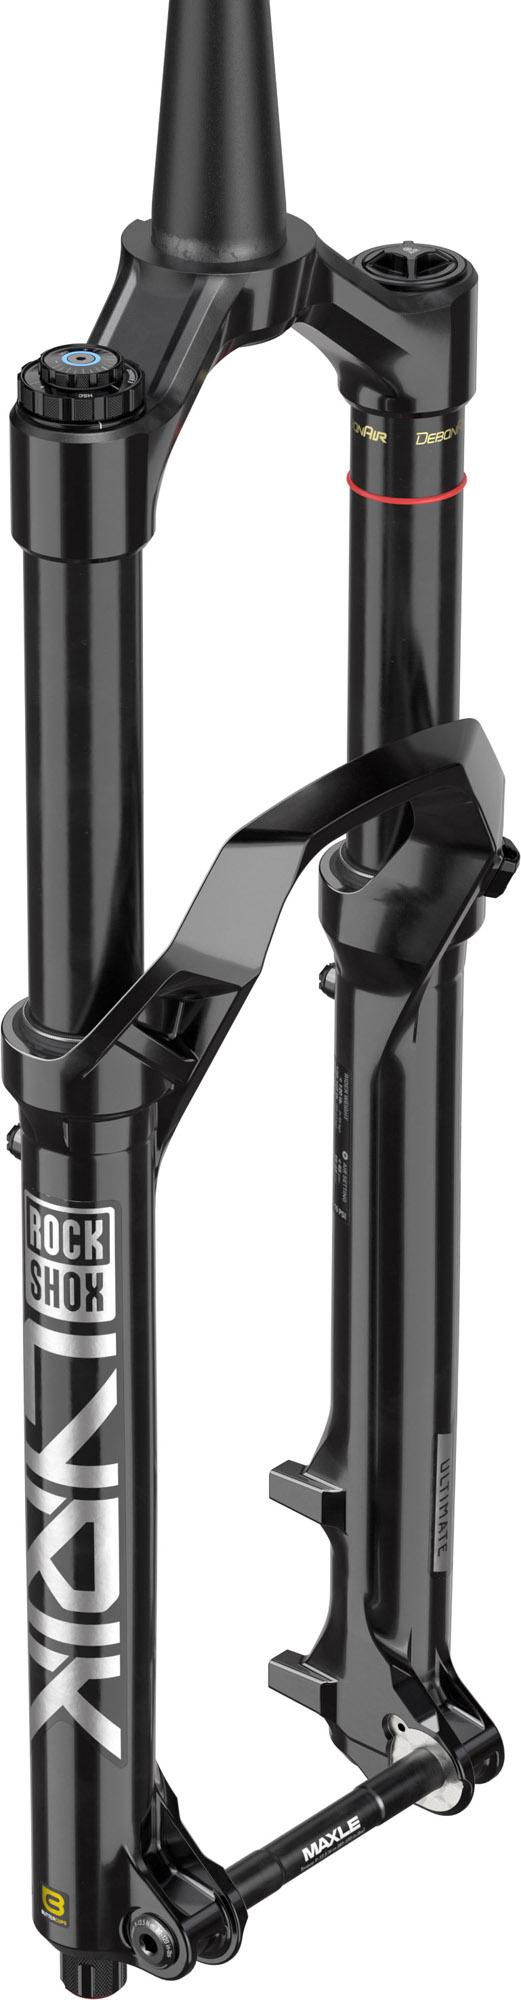 Rockshox Lyrik Ultimate Charger 3 Rc2 Fork - Gloss Black